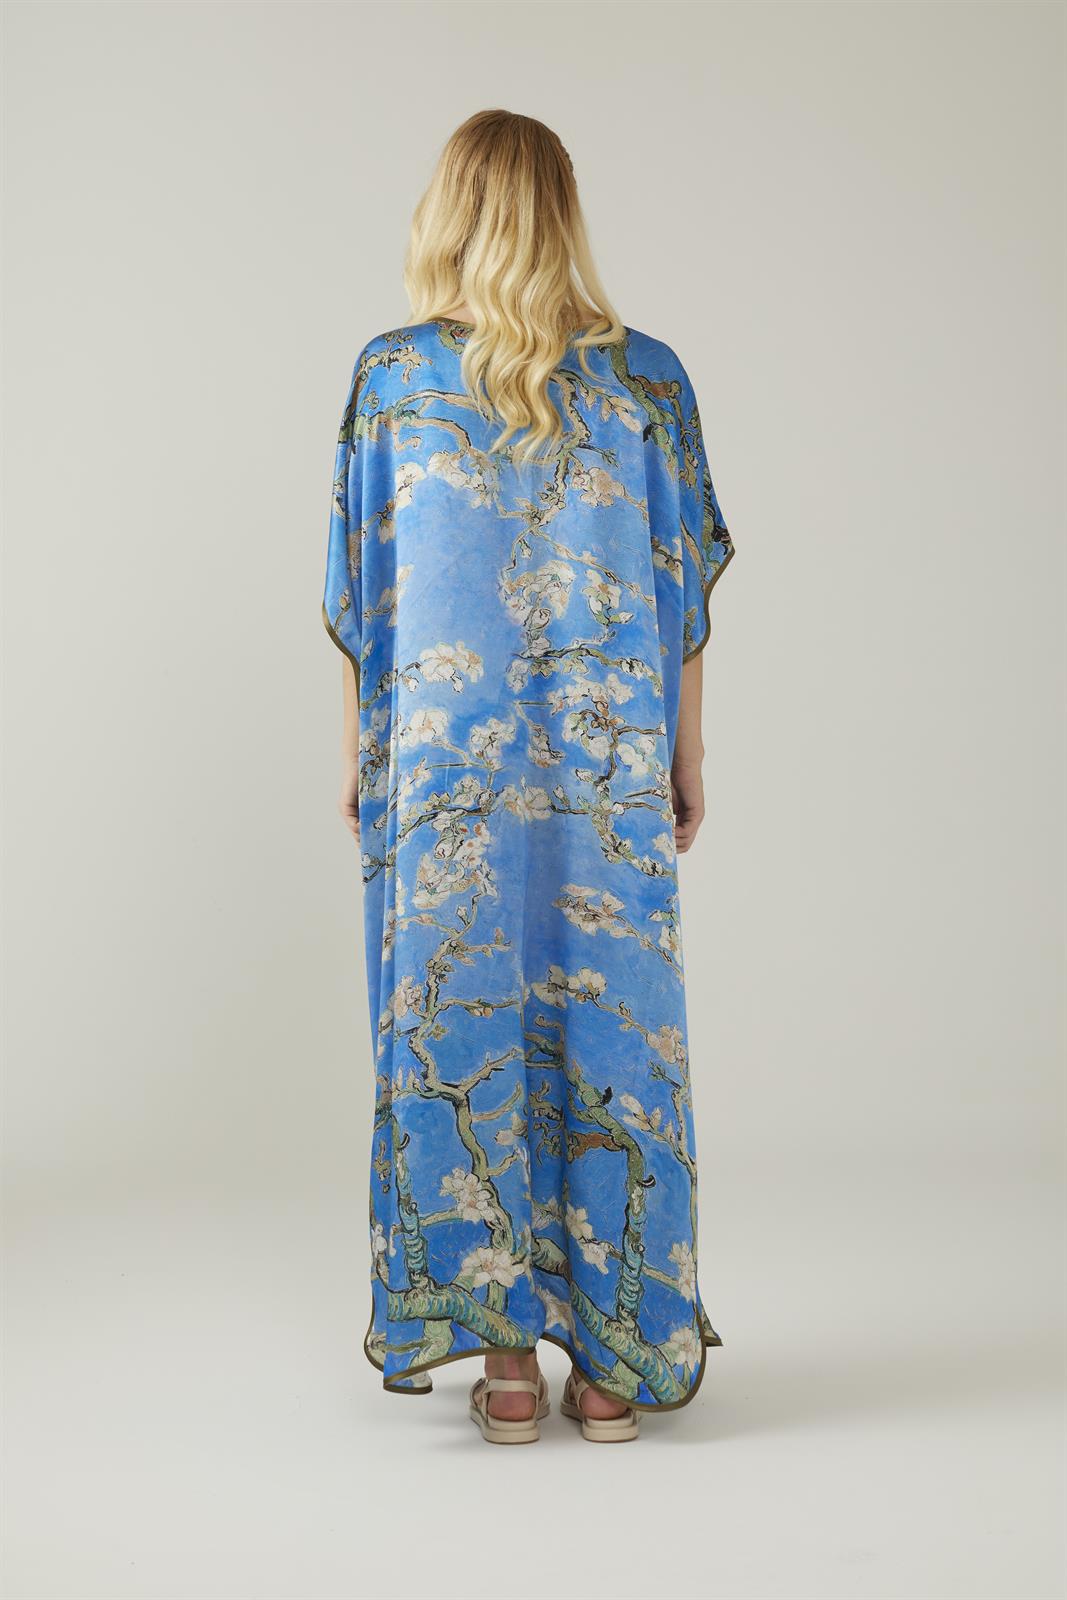 Ikigai The City Blue Van Gogh Almond Blossoms Patterned Satin Silk Dress / Kaftan